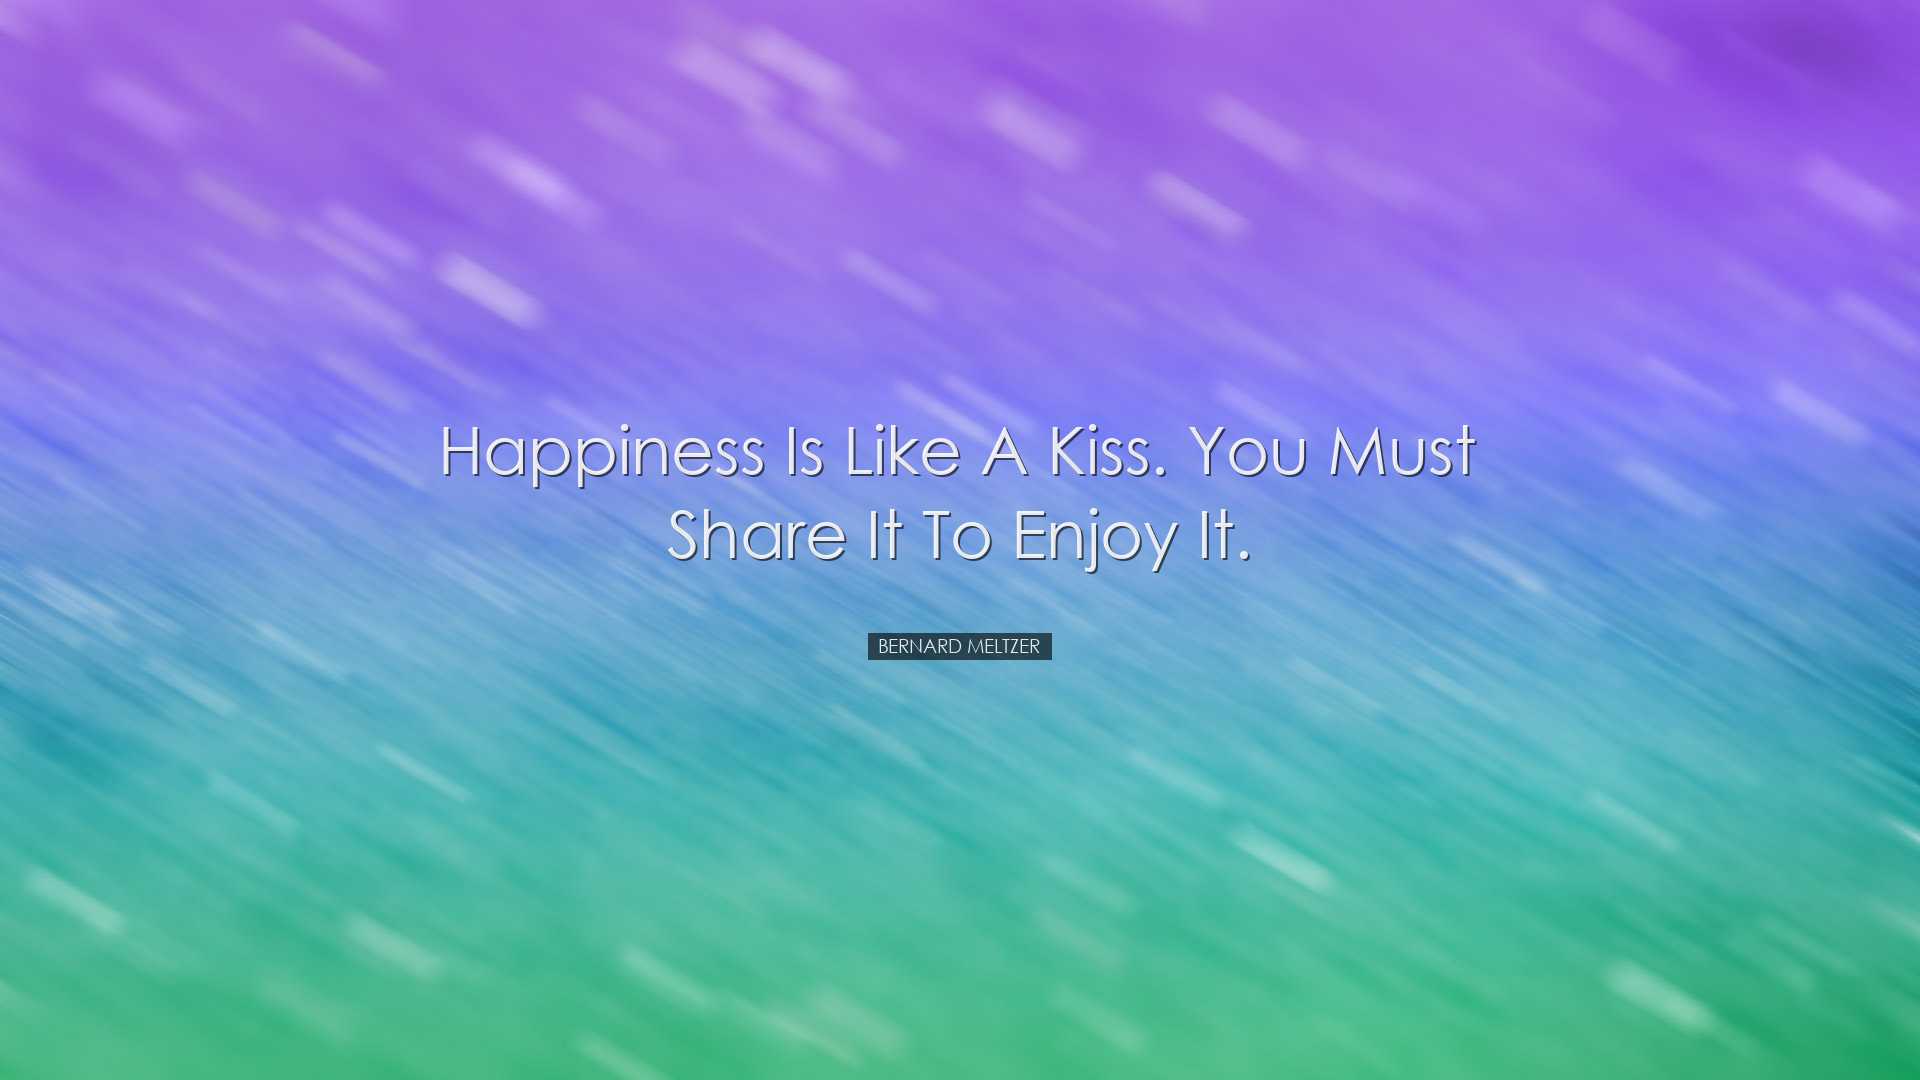 Happiness is like a kiss. You must share it to enjoy it. - Bernard